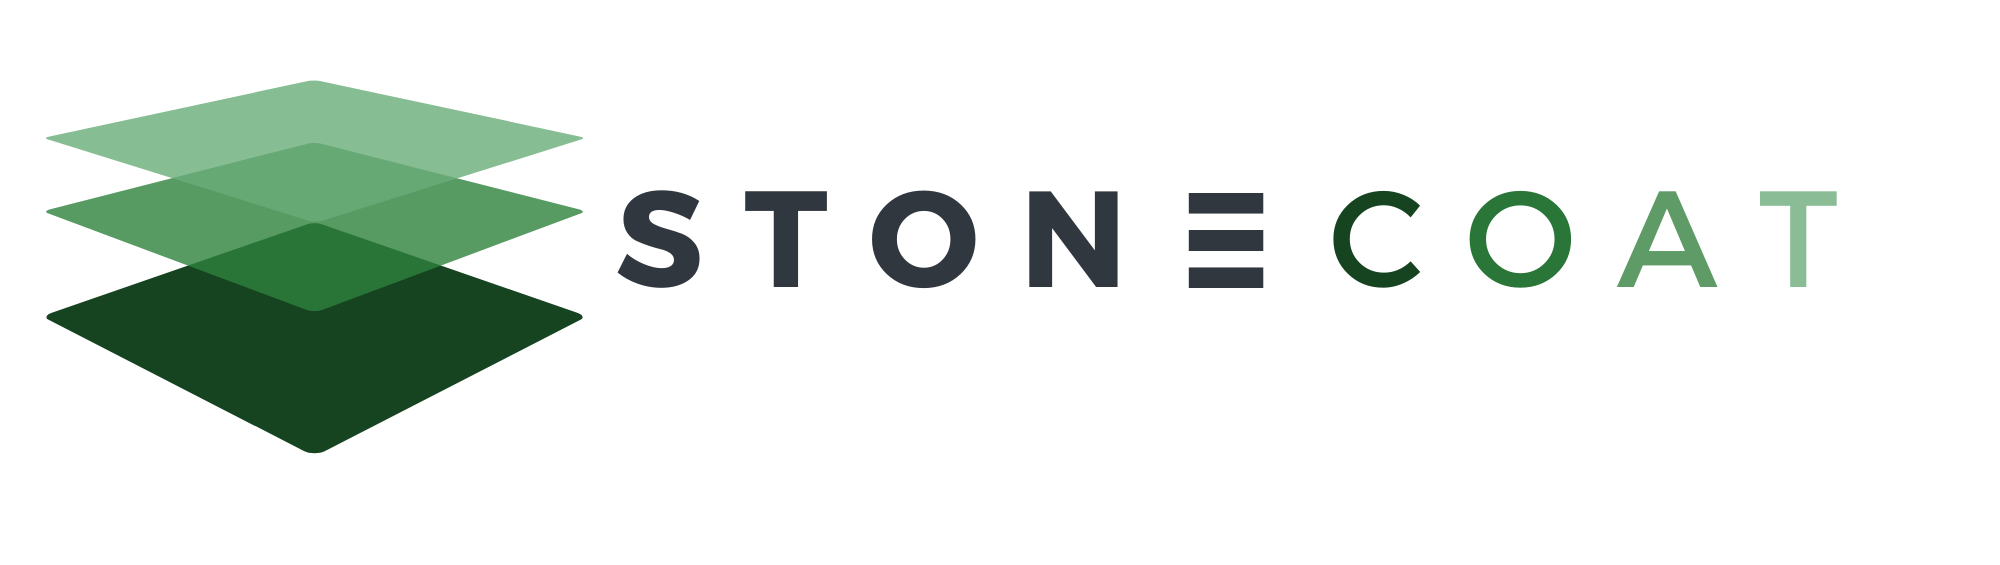 StoneCoat Logo Side-Text